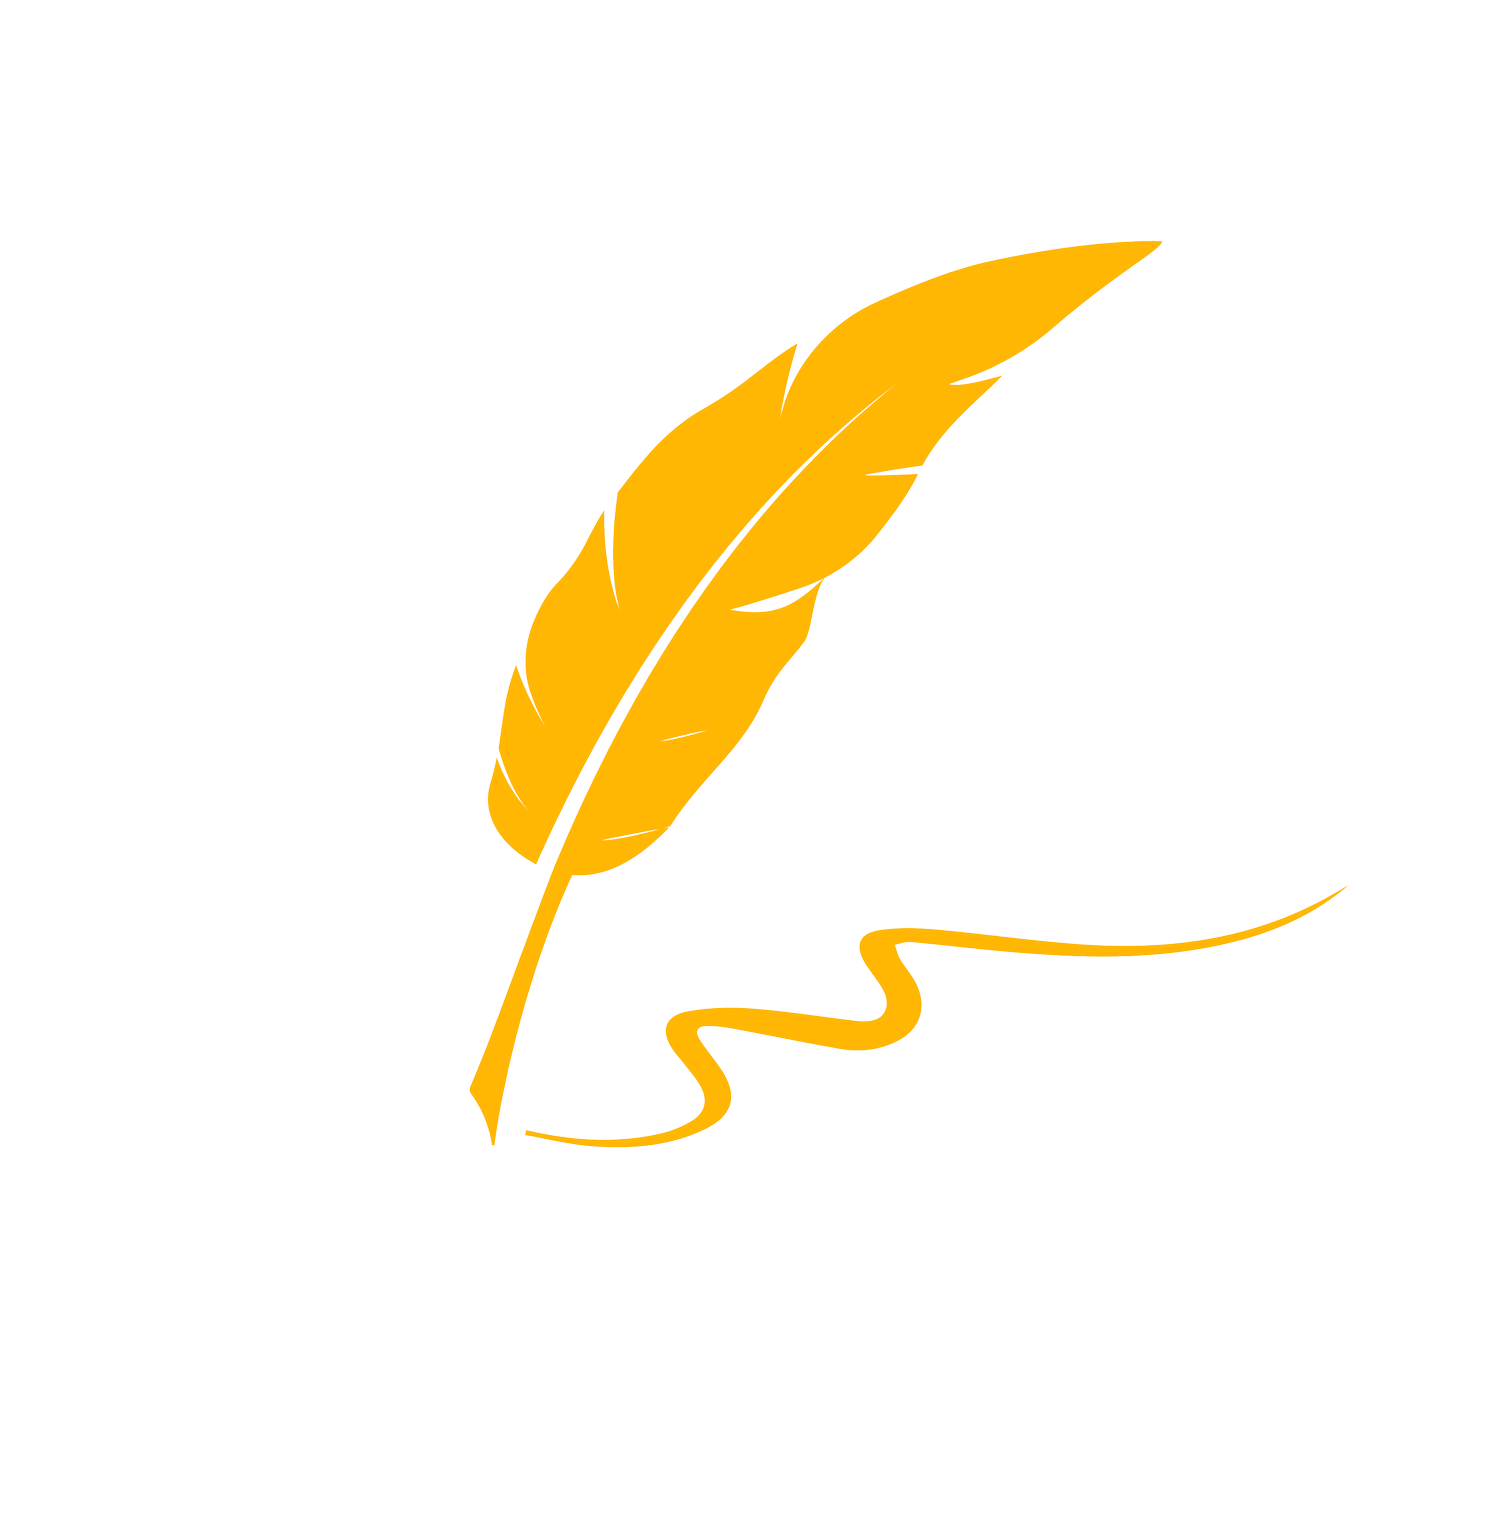 The Common Sense Movement